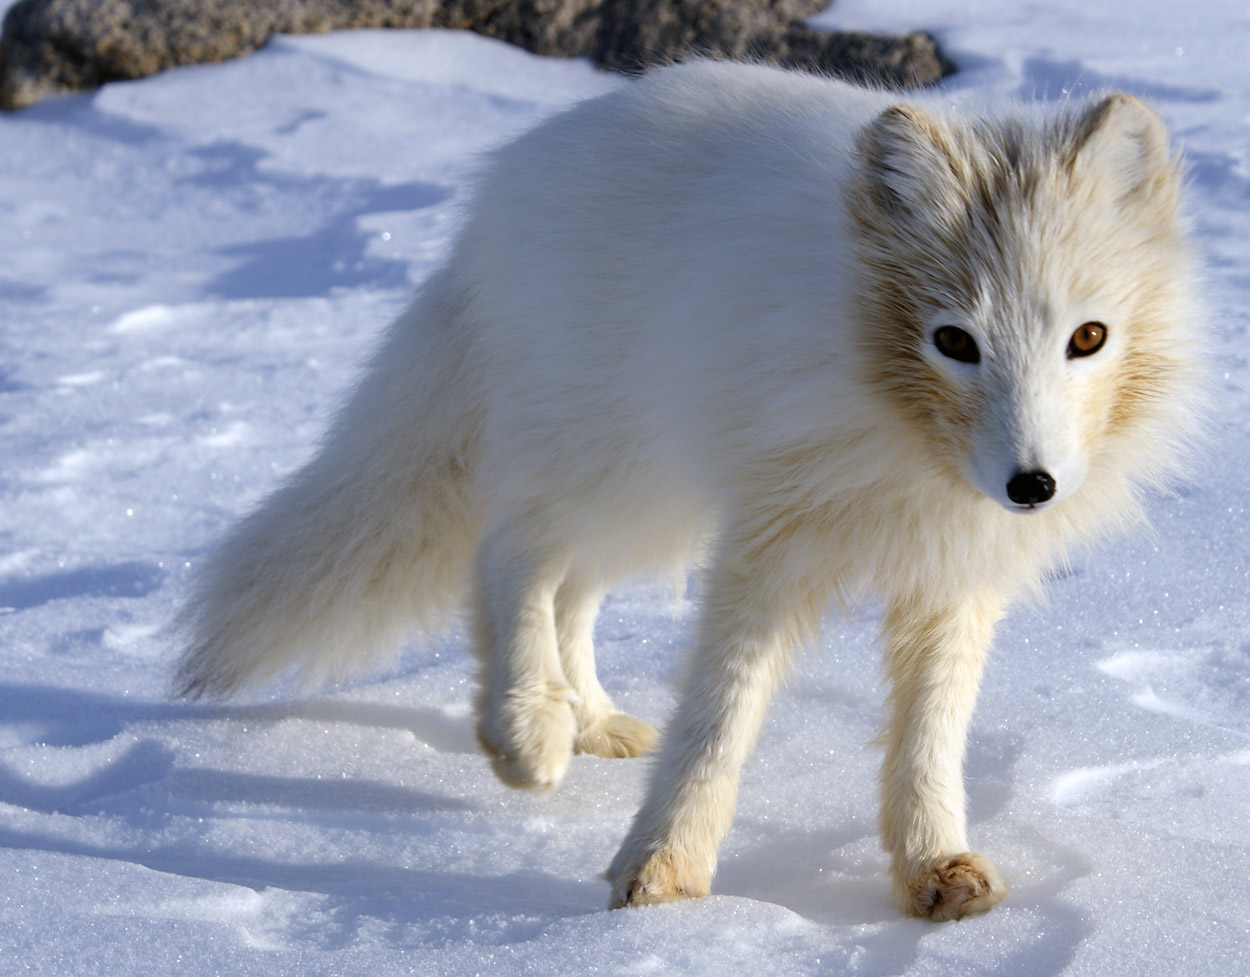 Arctic Fox Facts and Adaptations - Vulpes lagopus / Alopex lagopus